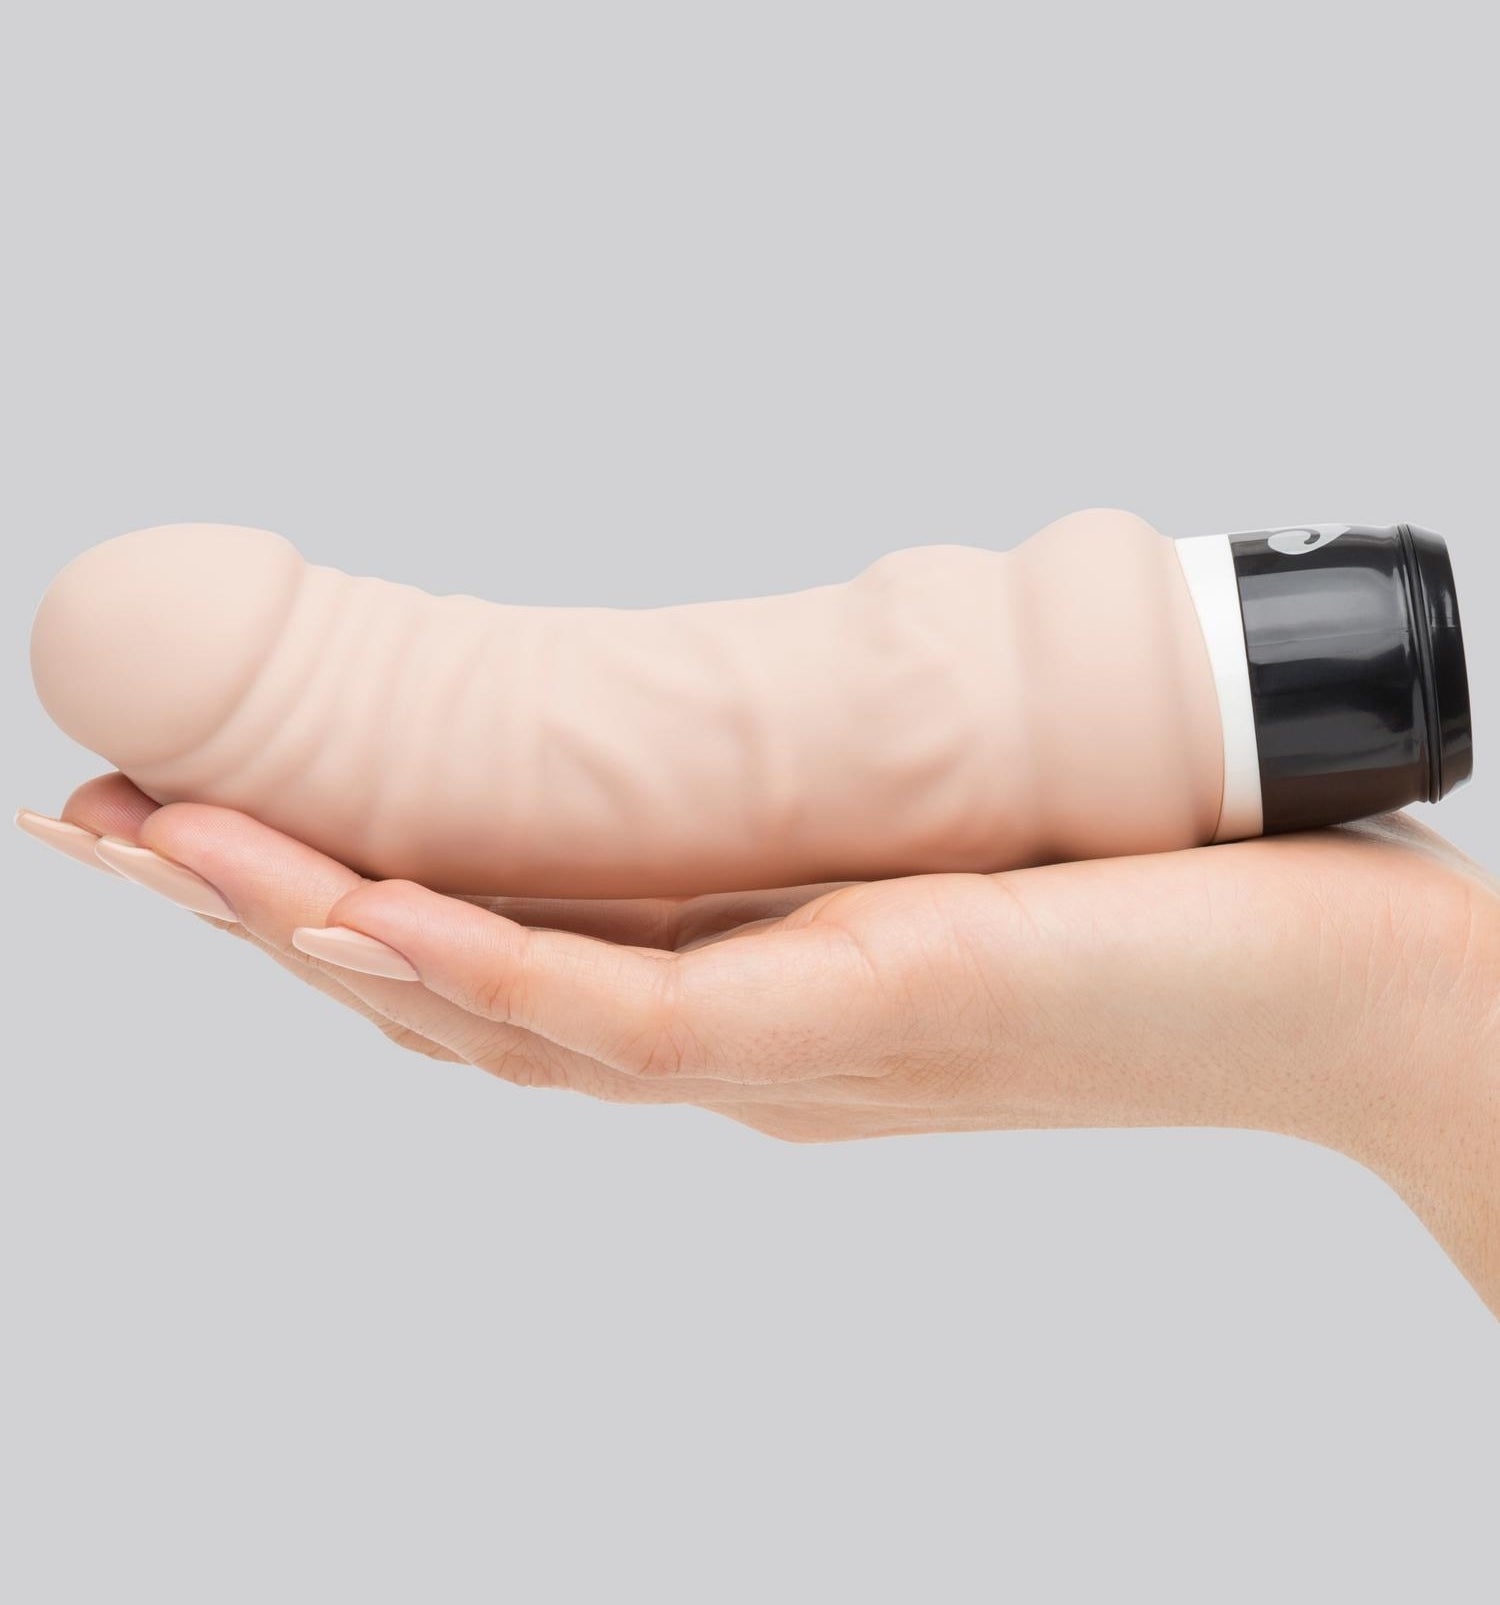 the Lovehoney Silicone 7 Function Mini Girthy Realistic Dildo Vibrator in a model&#x27;s hand